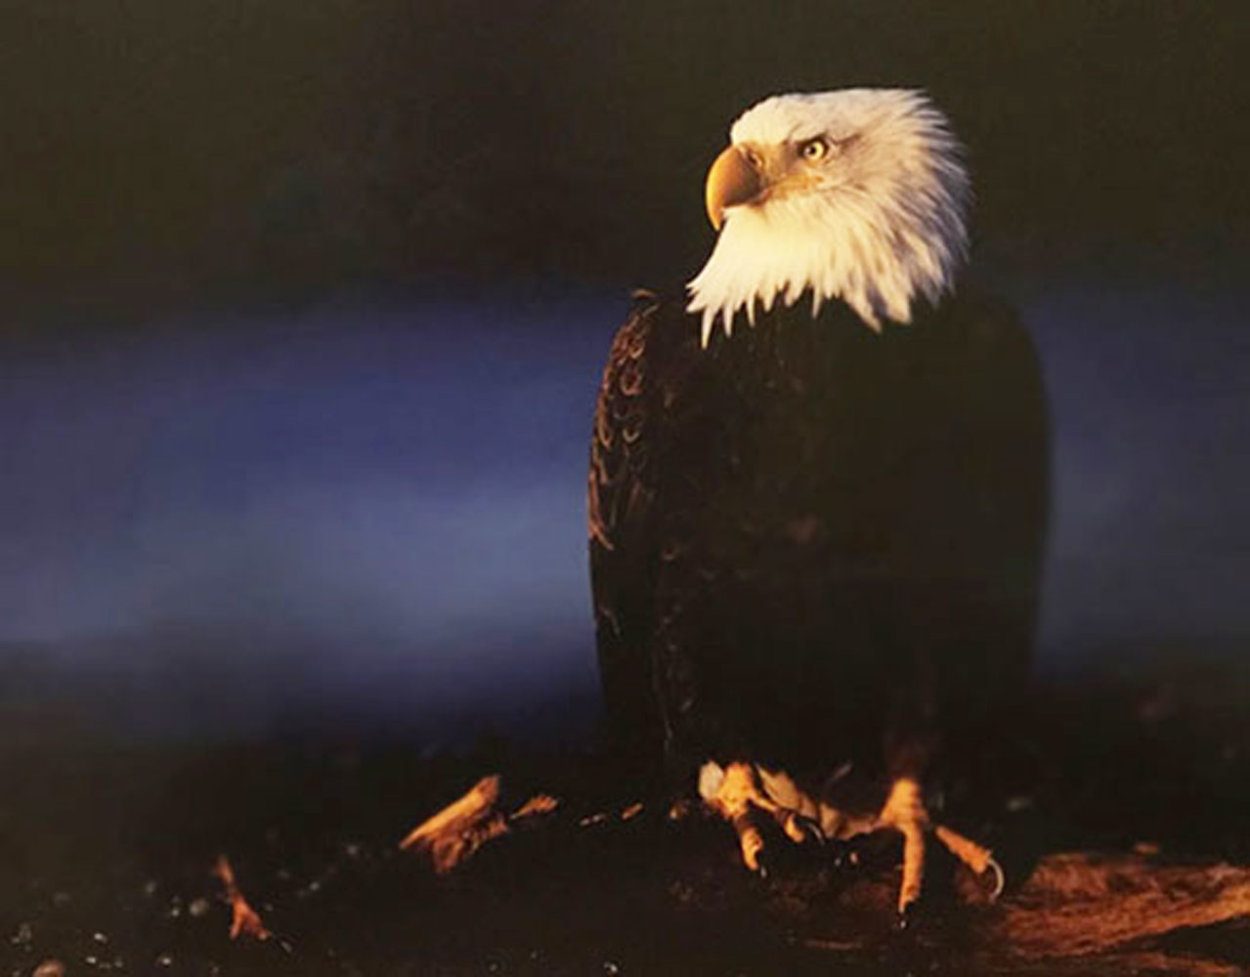 His Majesty - Bald Eagle 2000 Panorama by Thomas Mangelsen